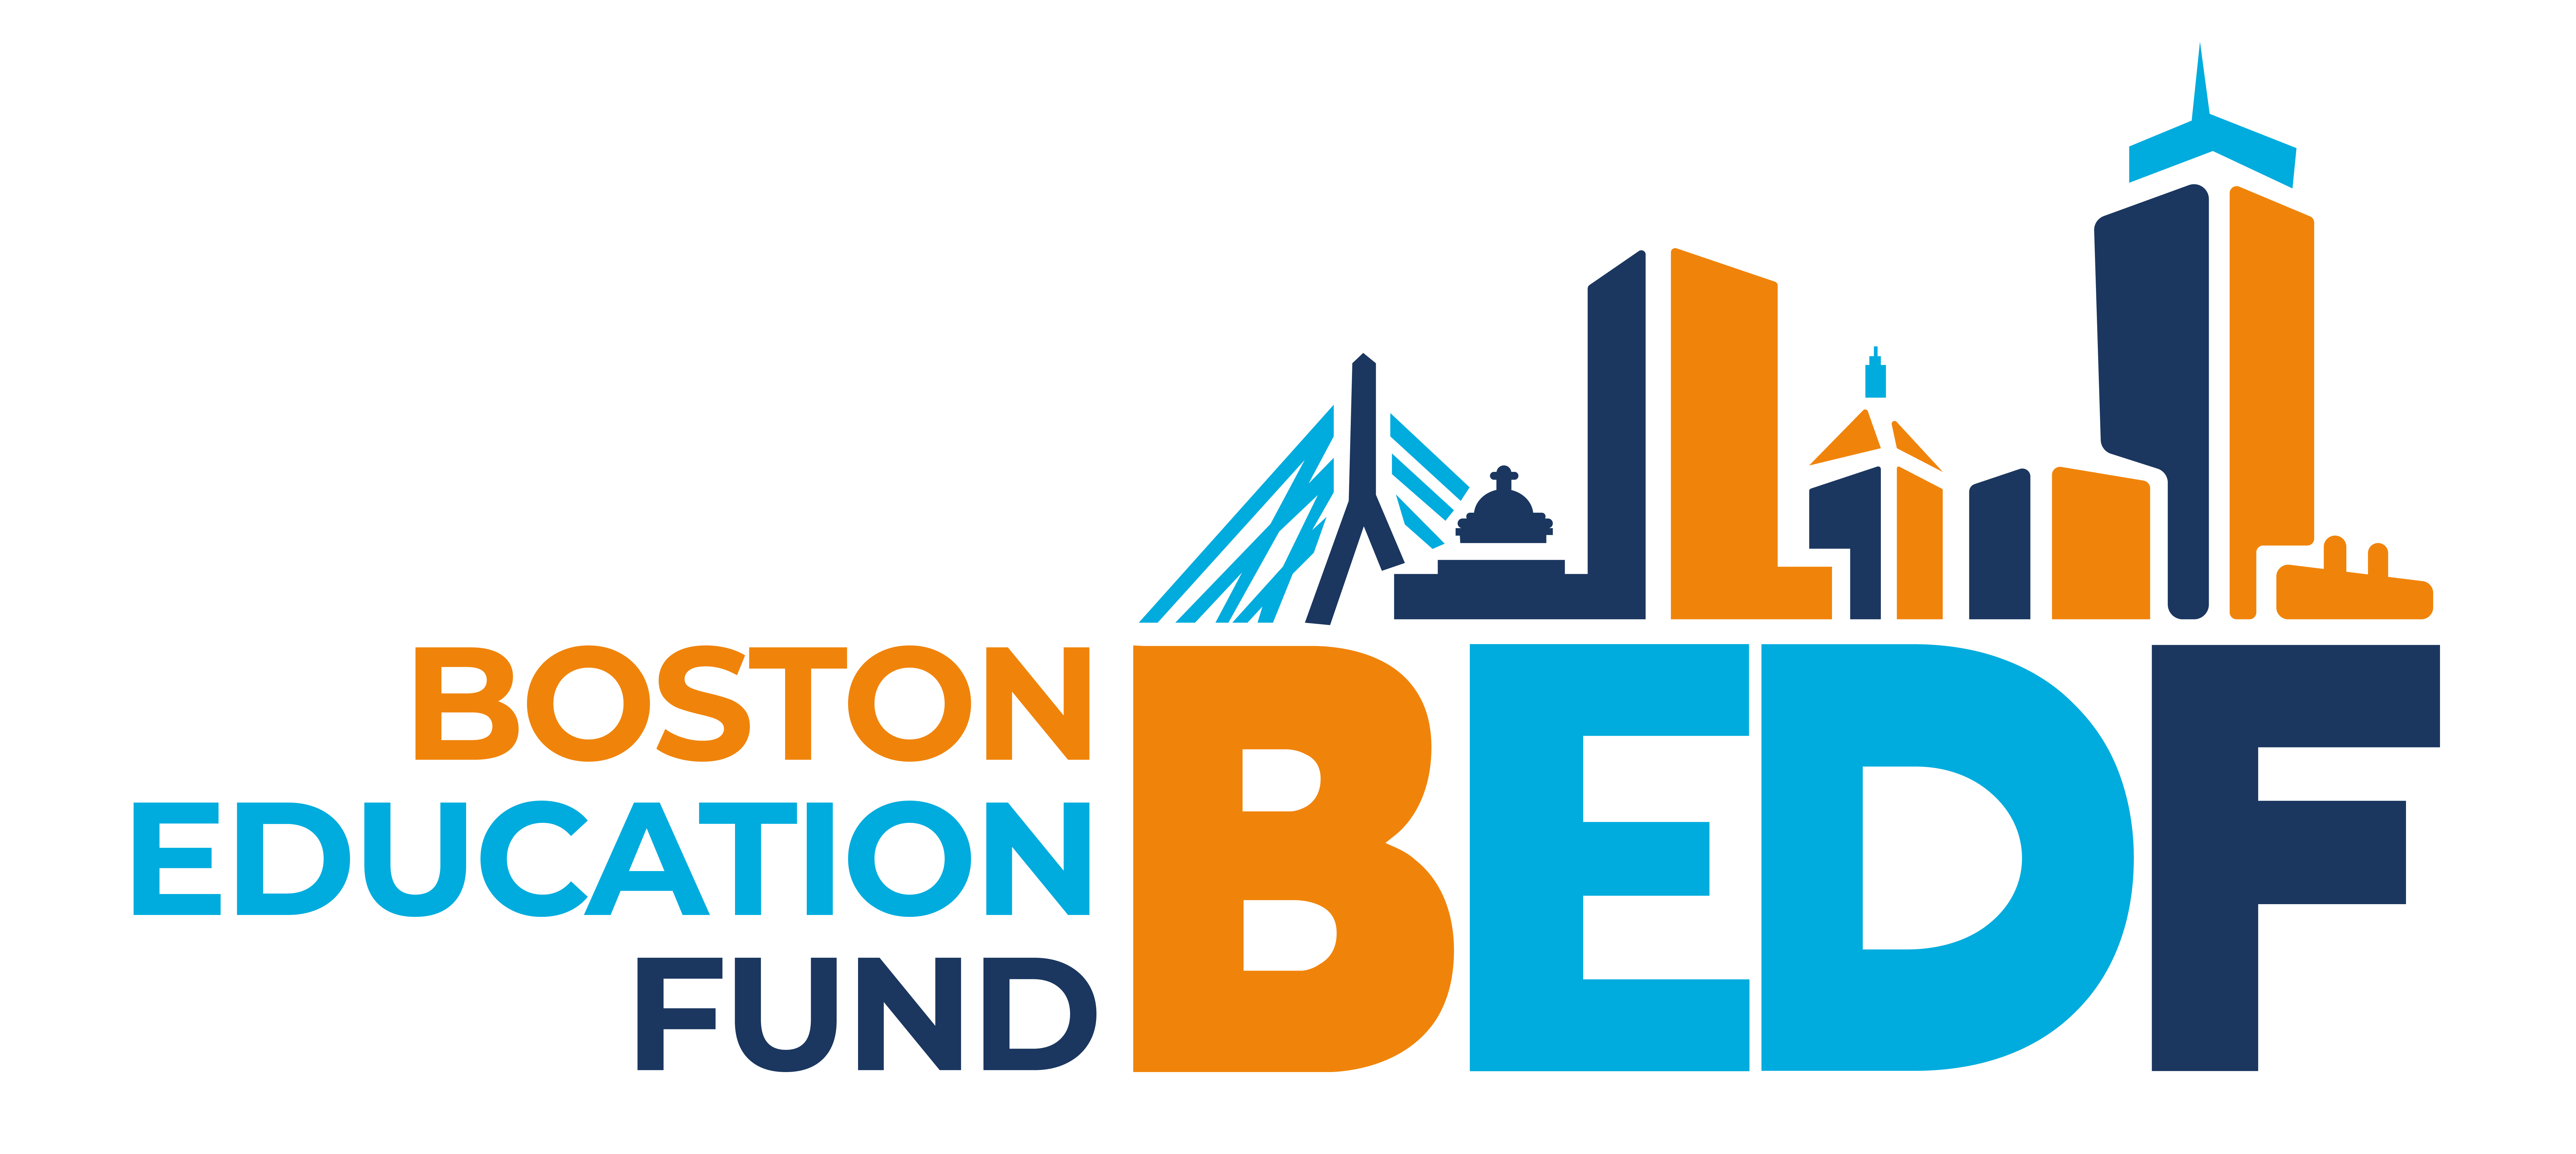 Boston Education Fund (BEDF) logo